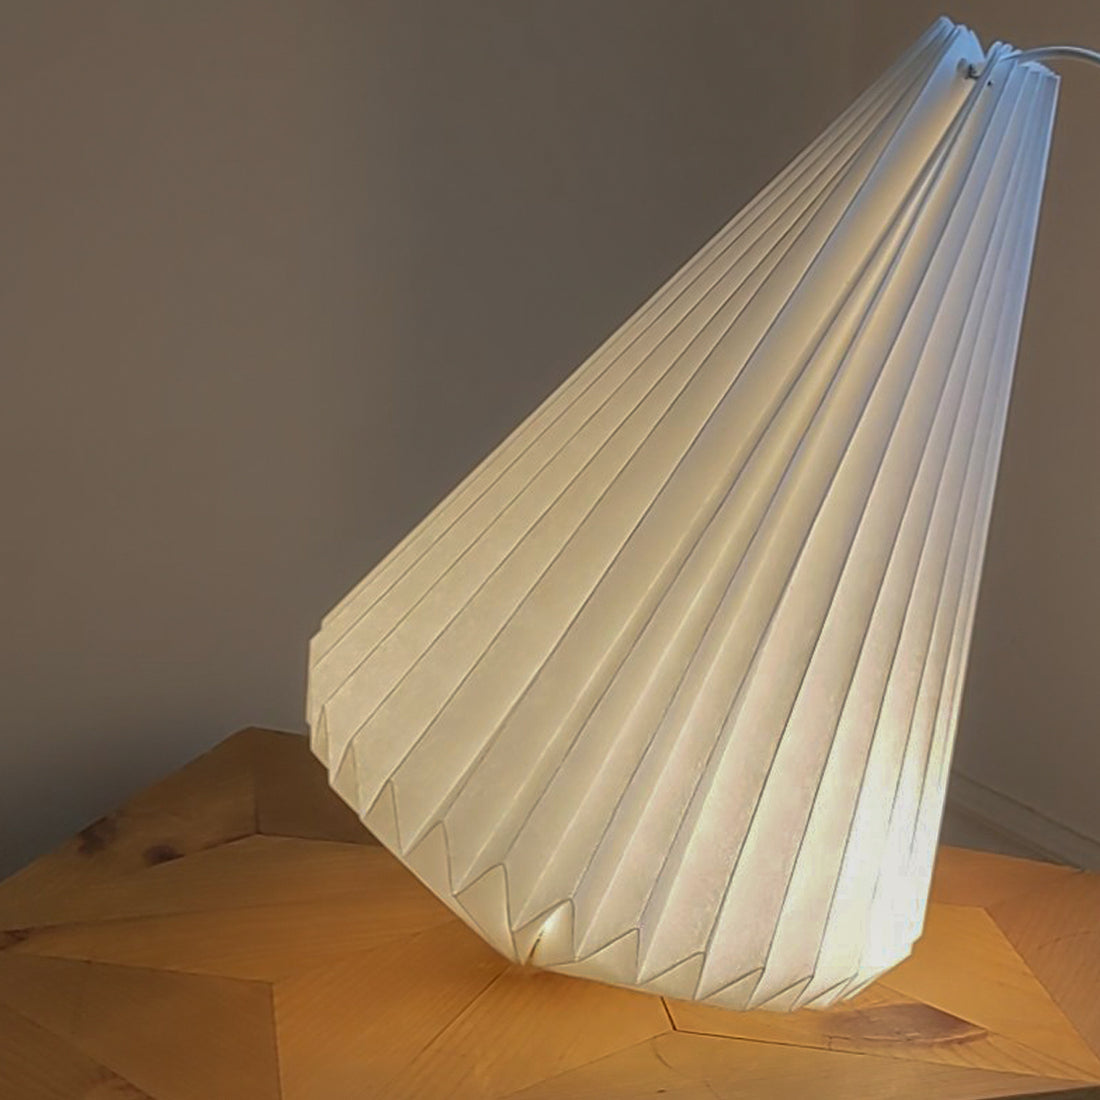 Lamp no135 by Laboratoire Textile, white chevrons